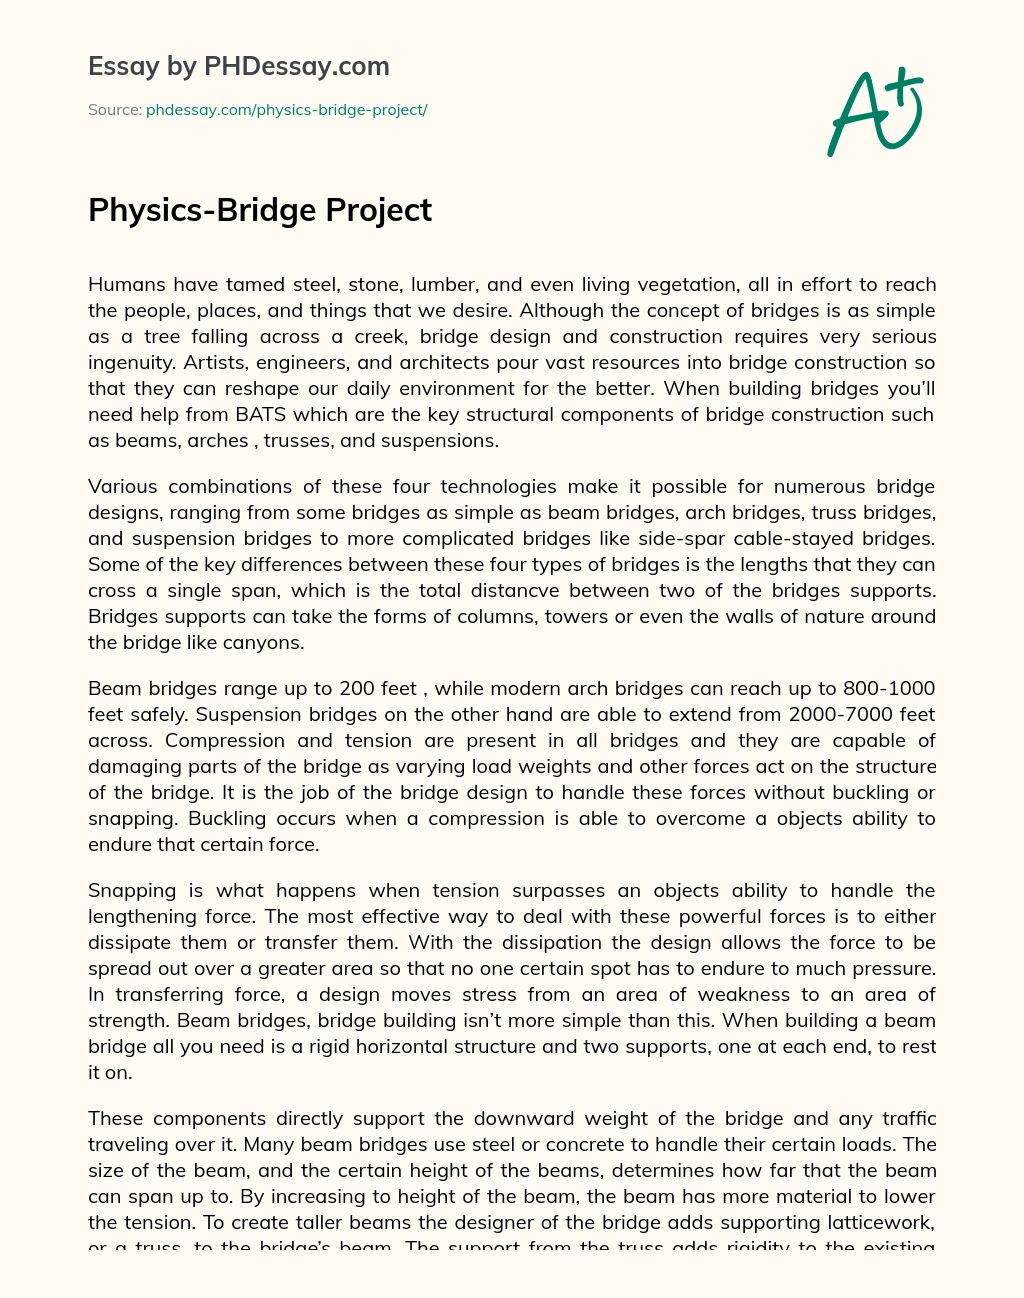 Physics-Bridge Project essay